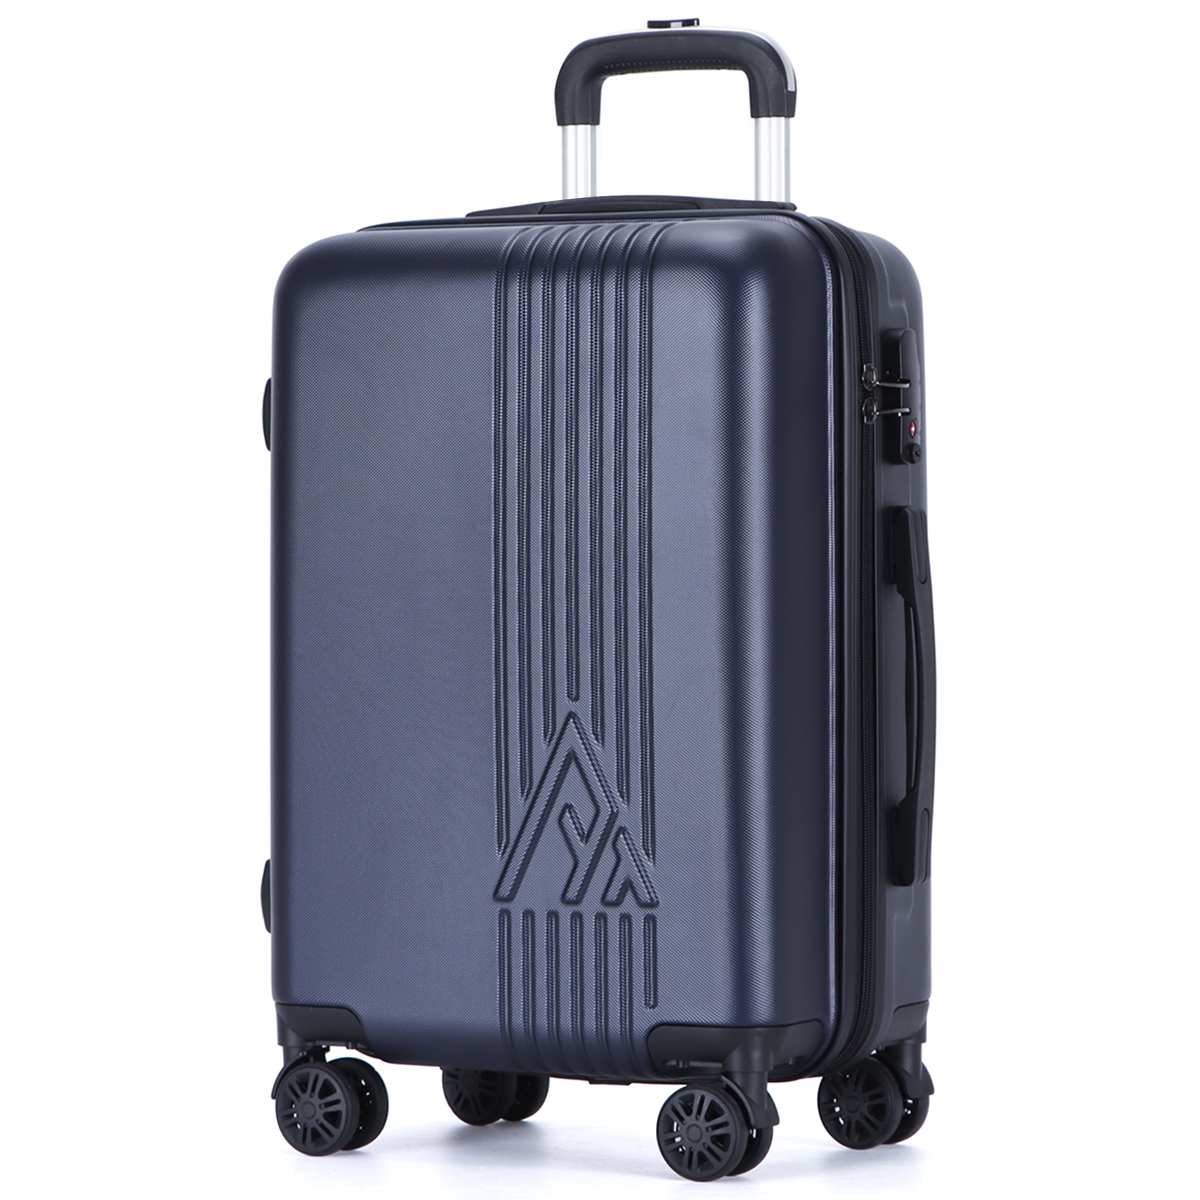 maleta-de-viaje-carry-on-de-mano-cabina-20-pulgadas-10-kg-abs-doble-calibre-candado-de-alta-seguridad-tsa-lock-azul-armored-travel